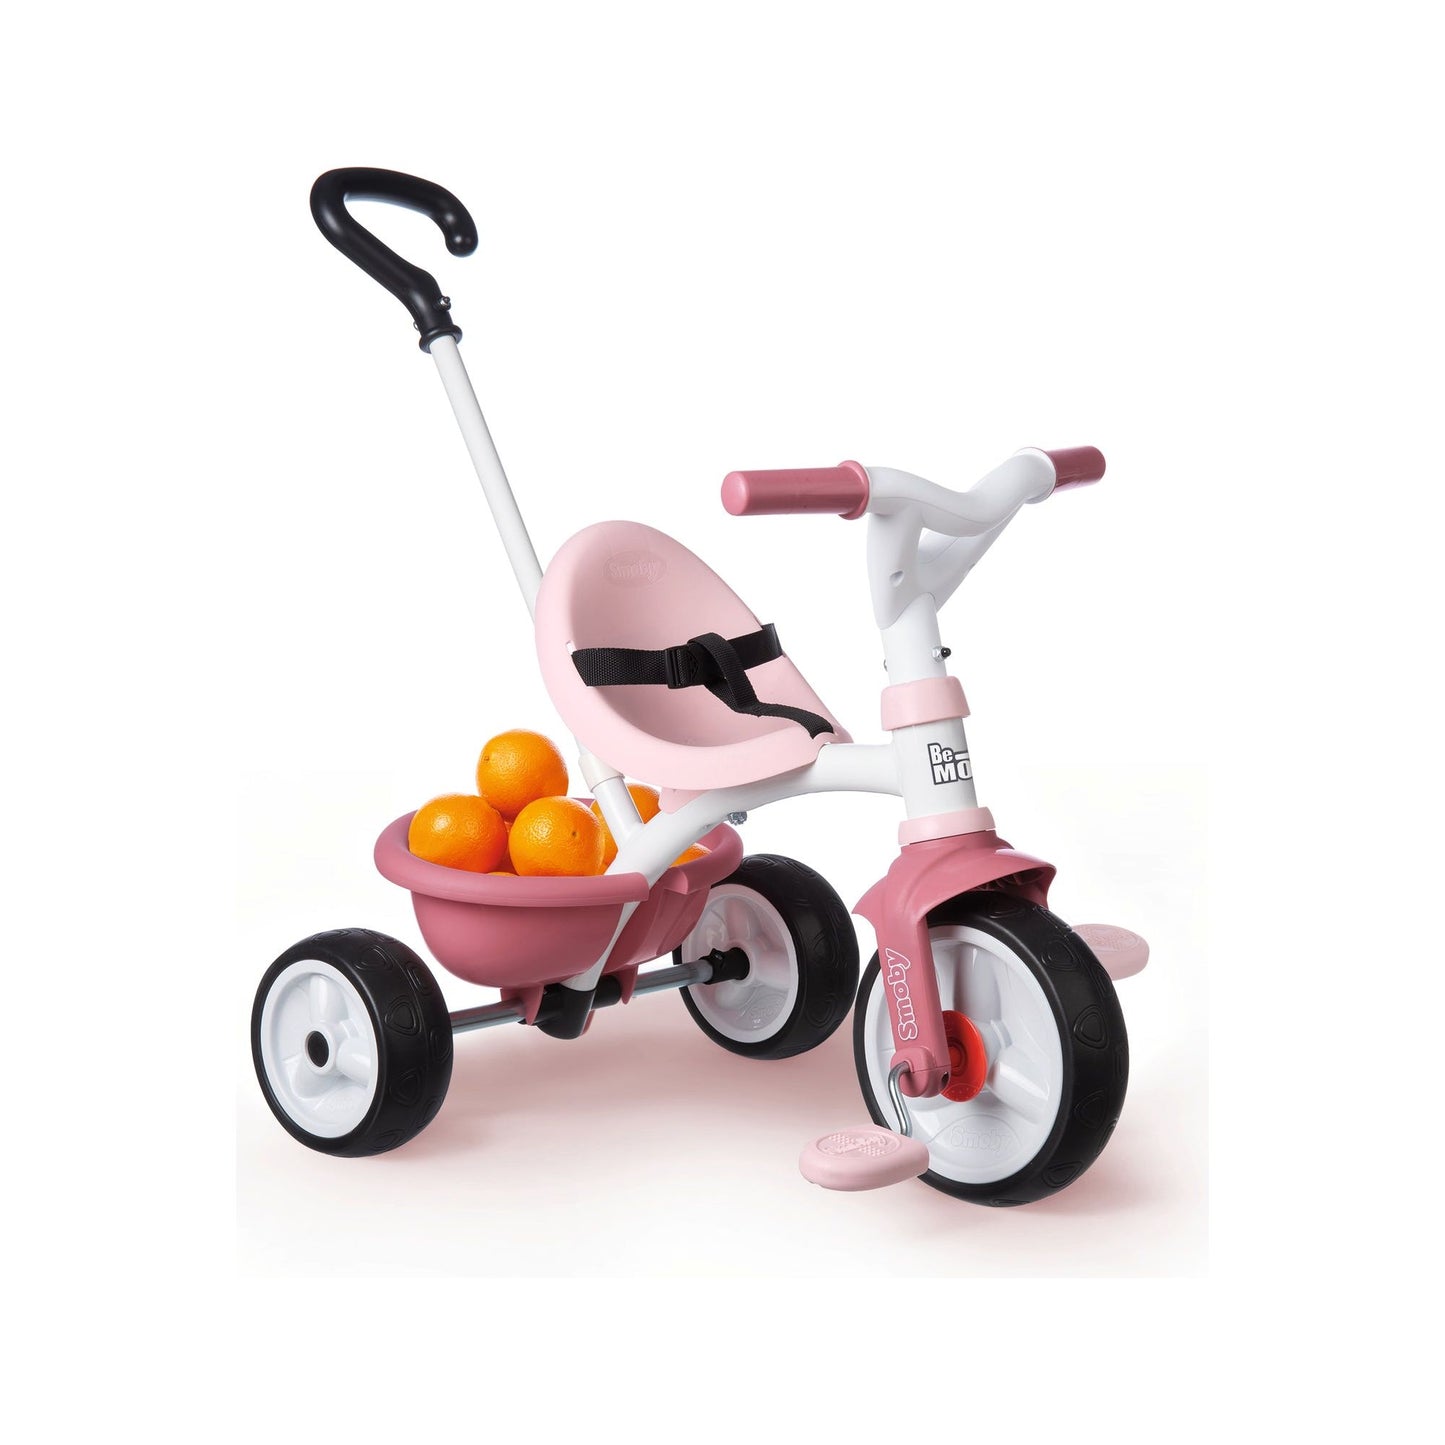 Smoby Baby Balade Trike - 10 months plus - Pink